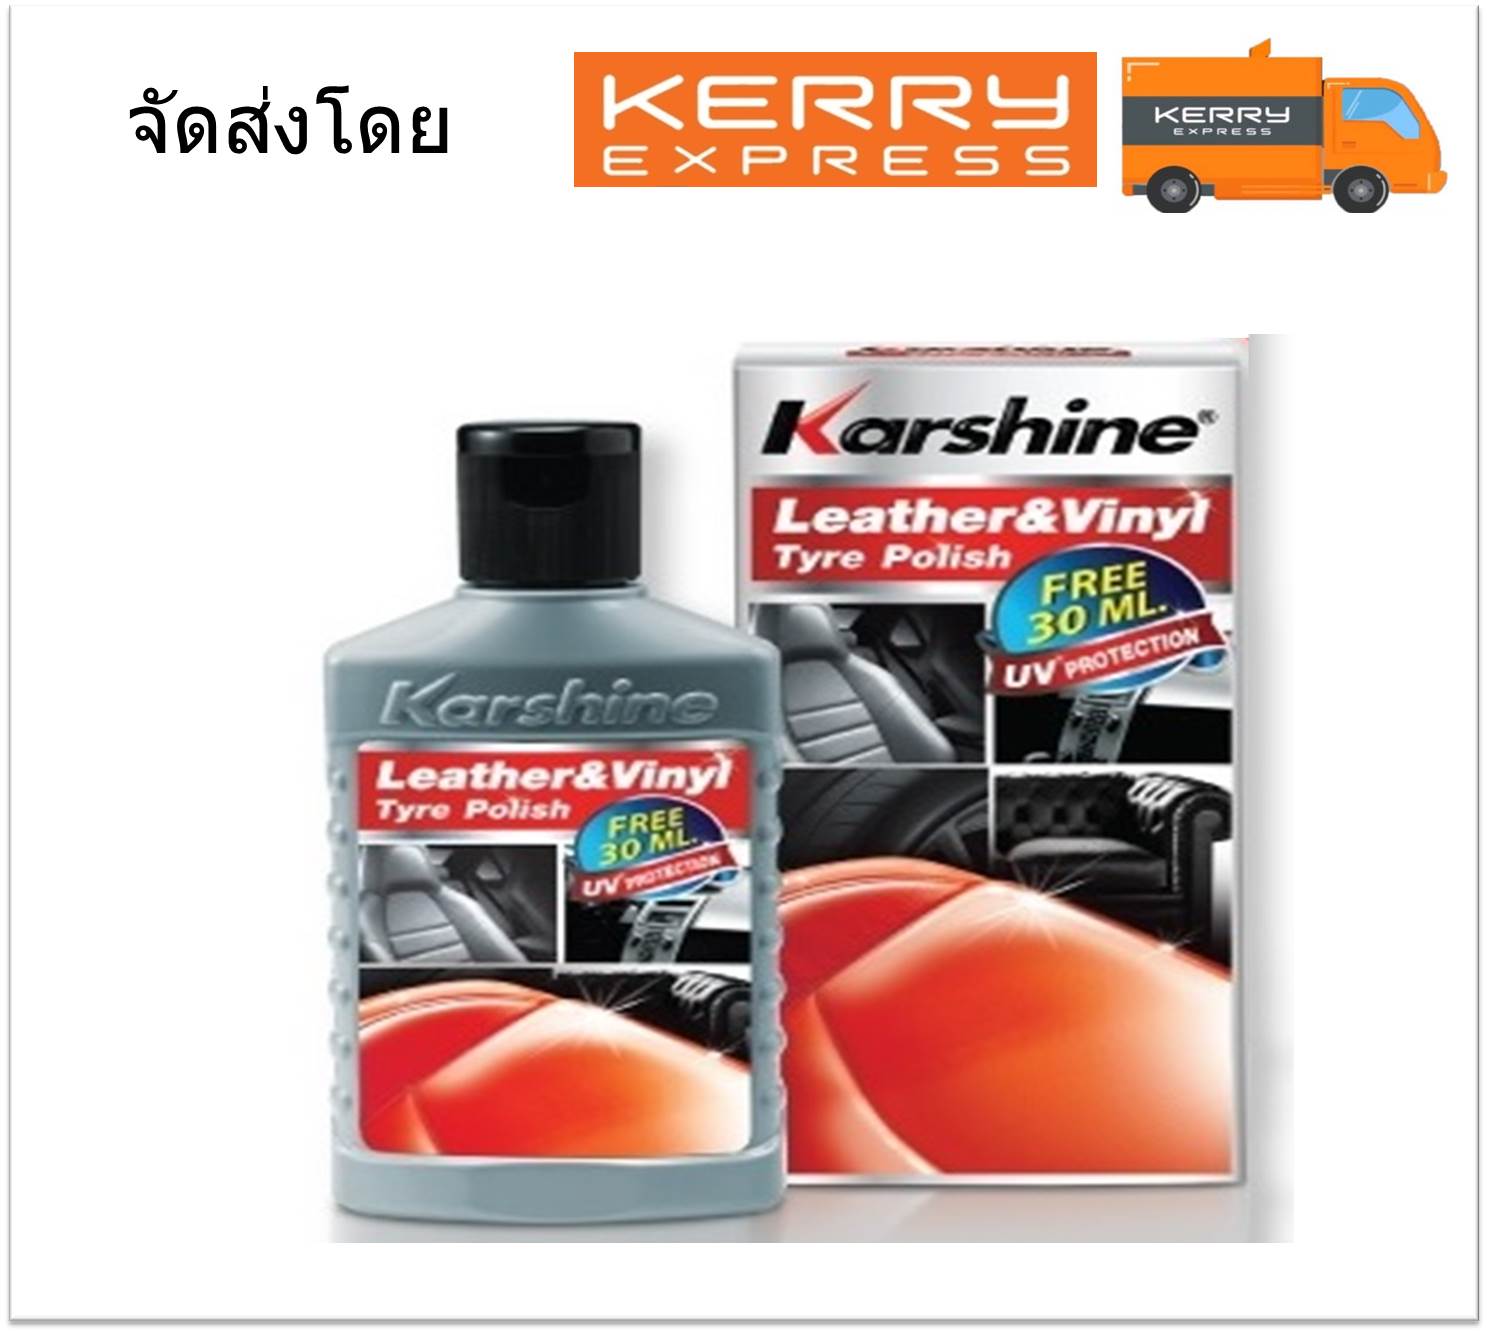 Karshine Leather & Vinyl Tyre Polish น้ำยาบำรุงรักษาและเคลือบเงาเบาะ ป้องกันแสงแดด ฝุ่นละออง 125 ml ฟรี Karshine เคลือบสีรถ Wax 30 ml + ฟองน้ำ